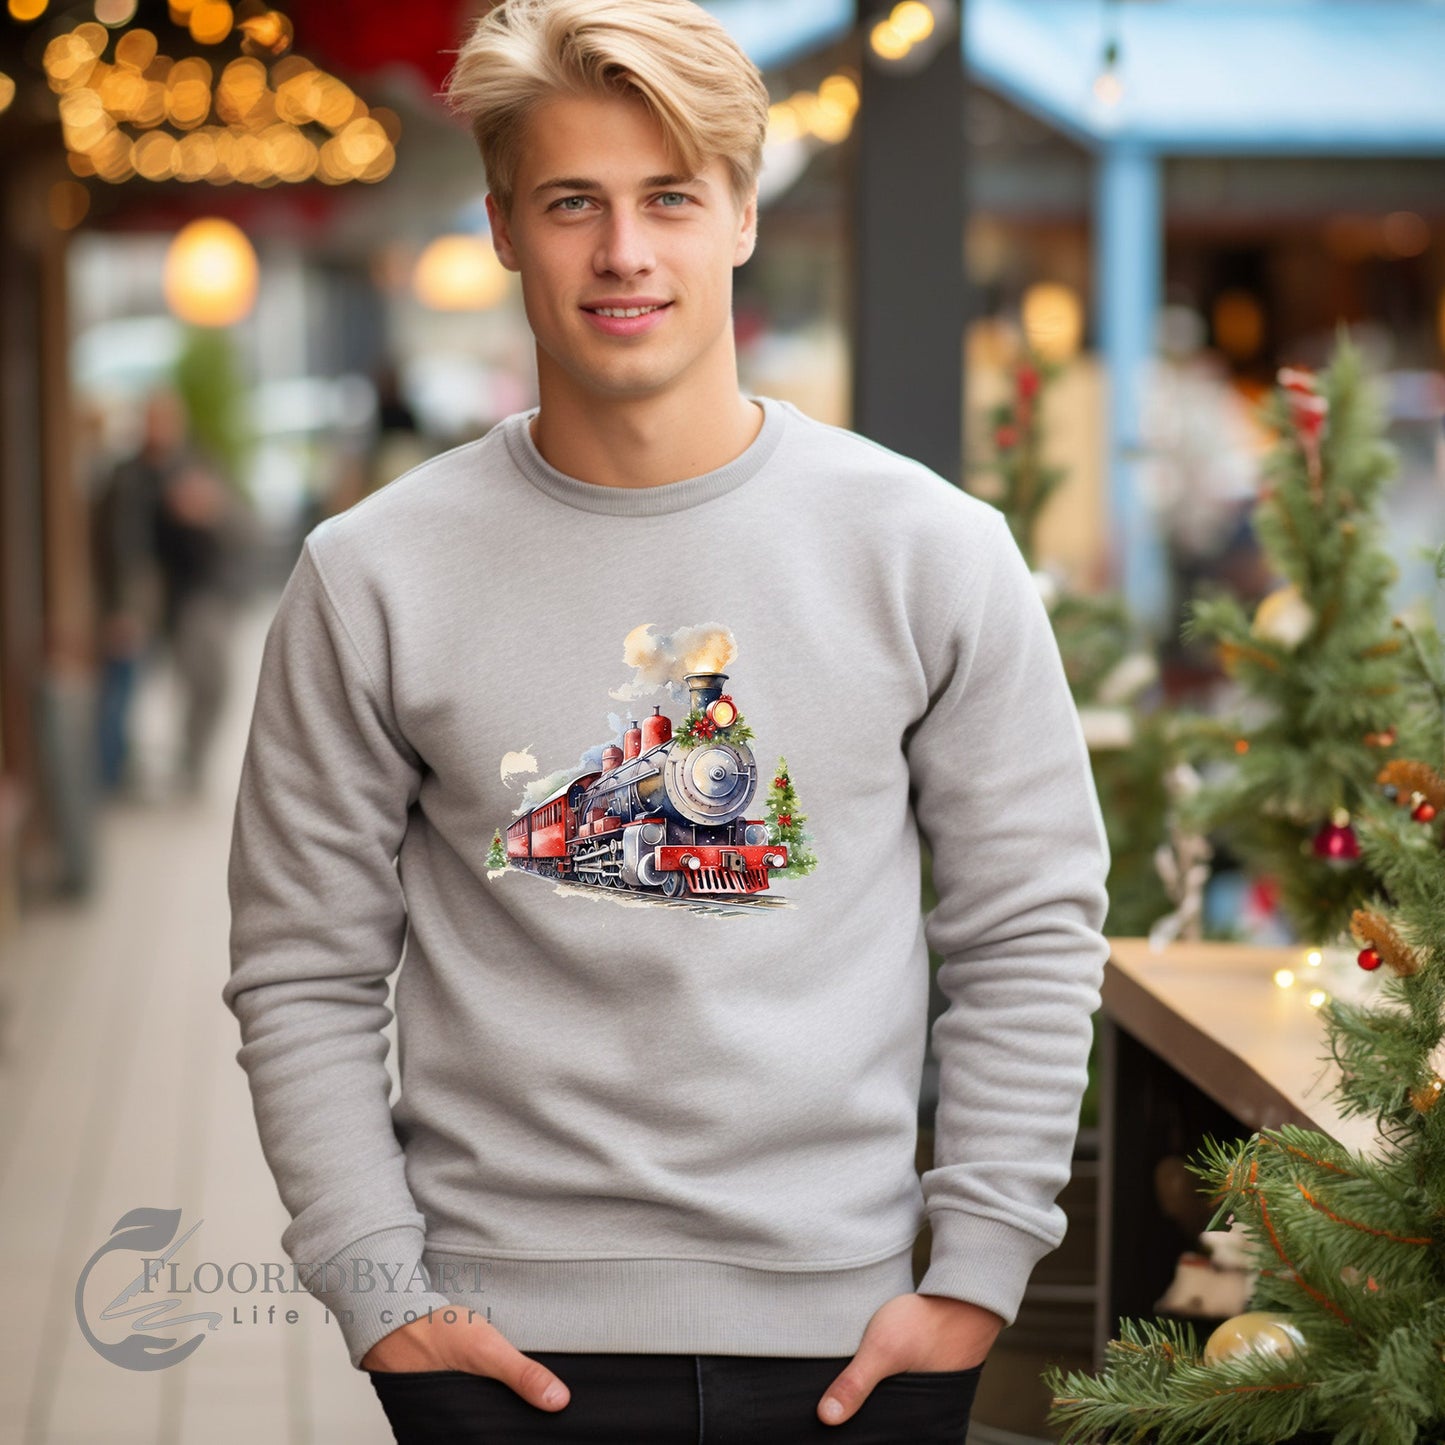 Christmas Train Sweatshit, Style #2, Whole Family Christmas Shirt - FlooredByArt